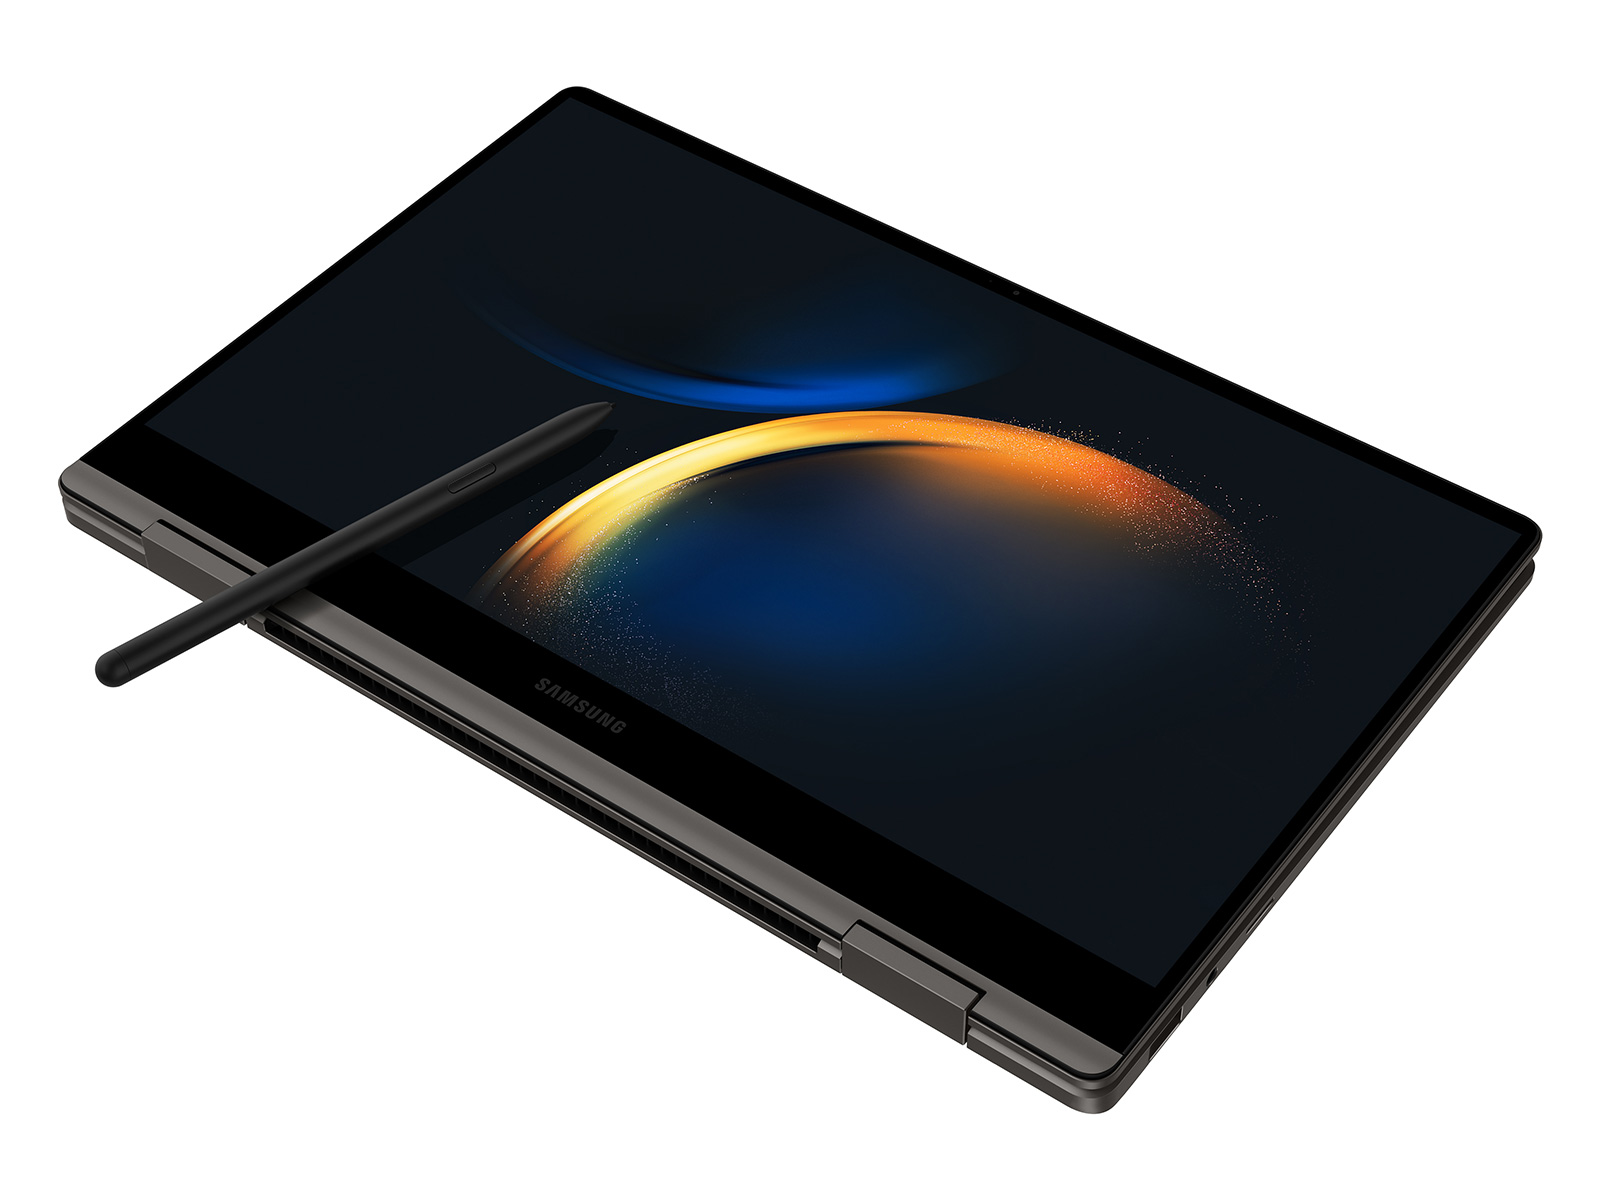 Samsung Galaxy Book3 360 13.3 (NP730QFG-KB3FR) - PC portable